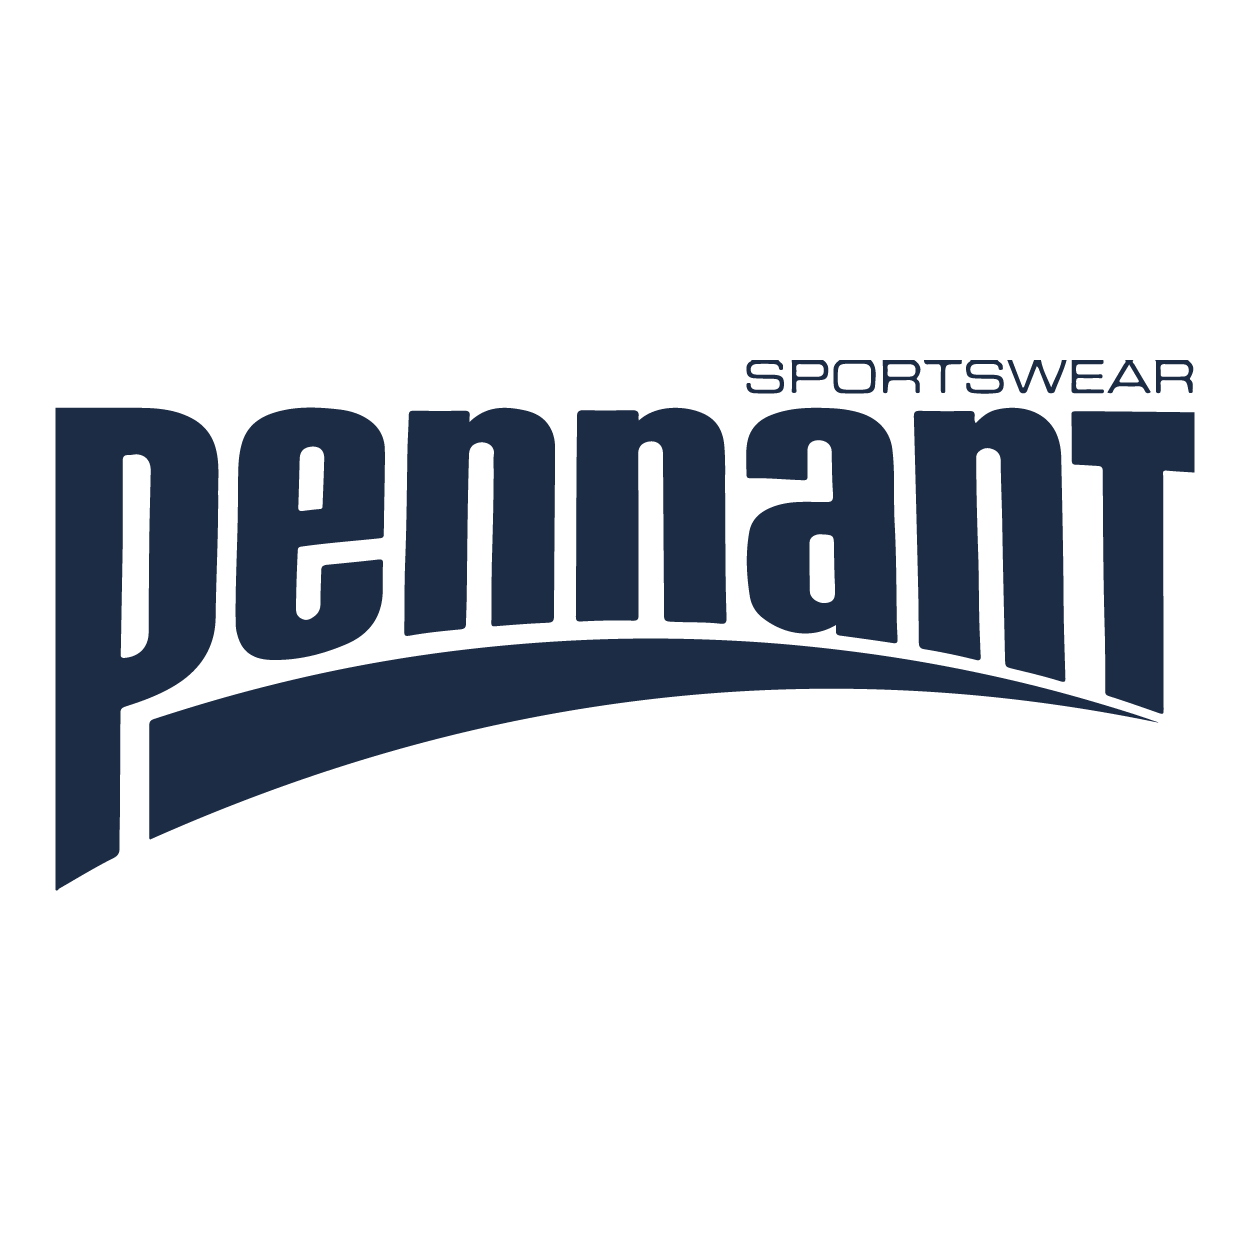 Pennant Sportswear Logo